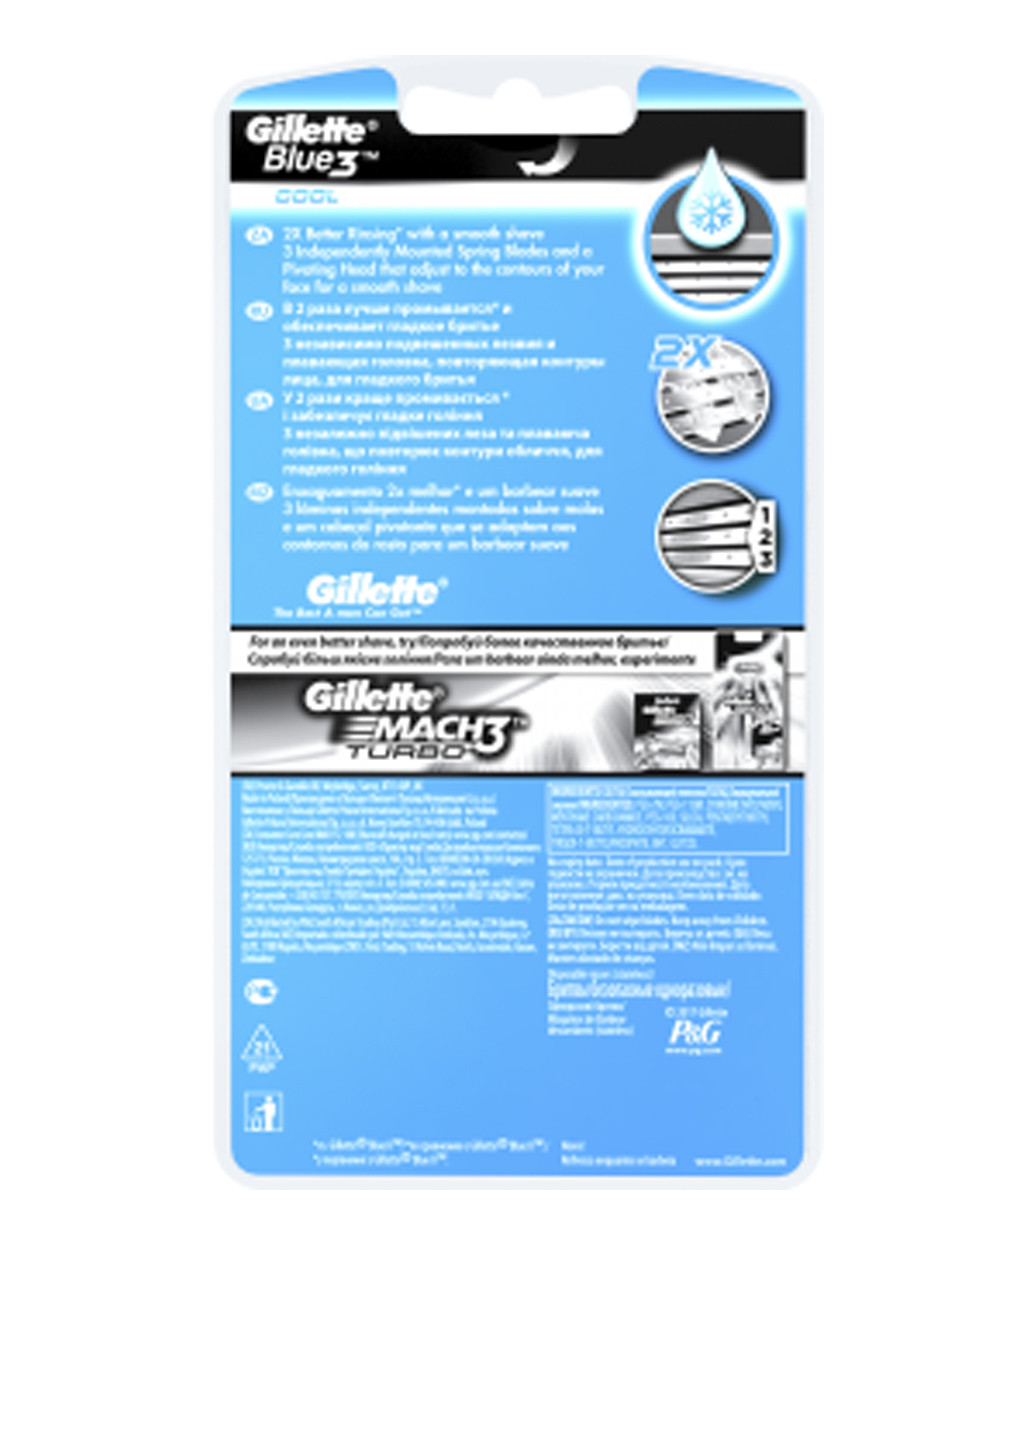 Бритва Blue 3 Cool (3 шт.) Gillette (138200681)